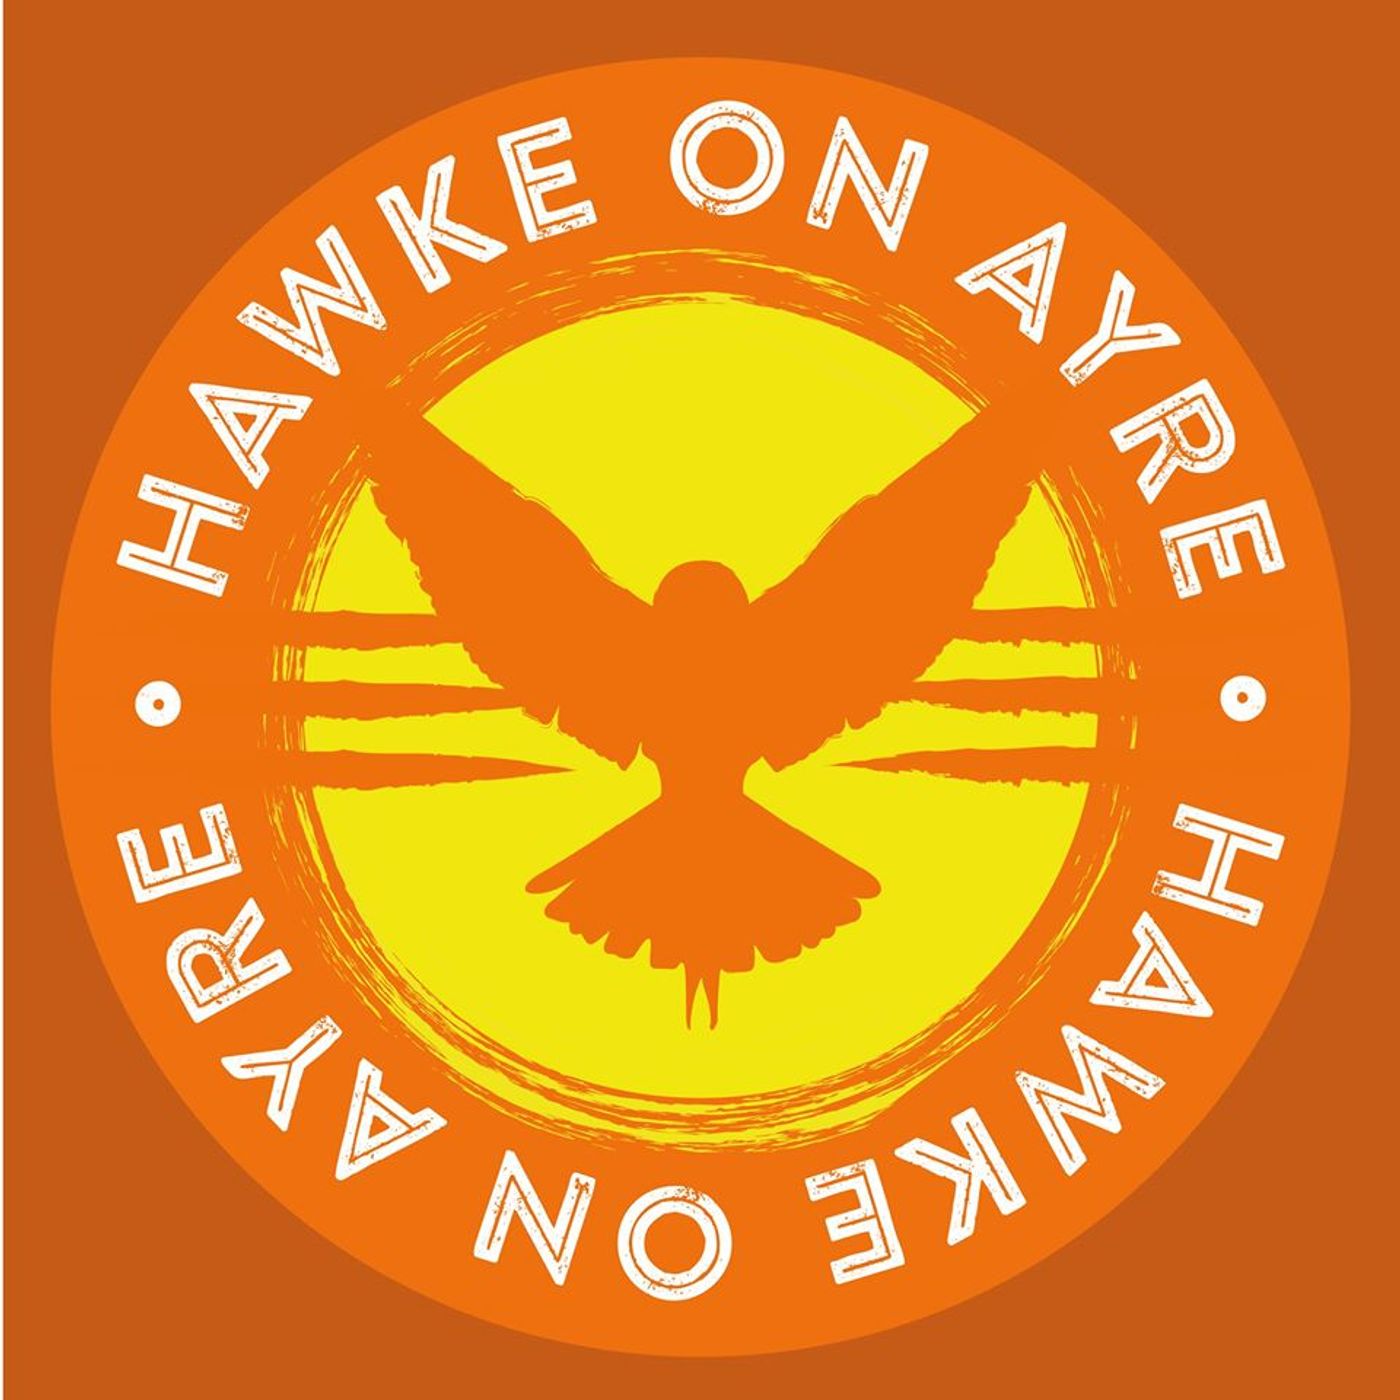 Hawke on Ayre